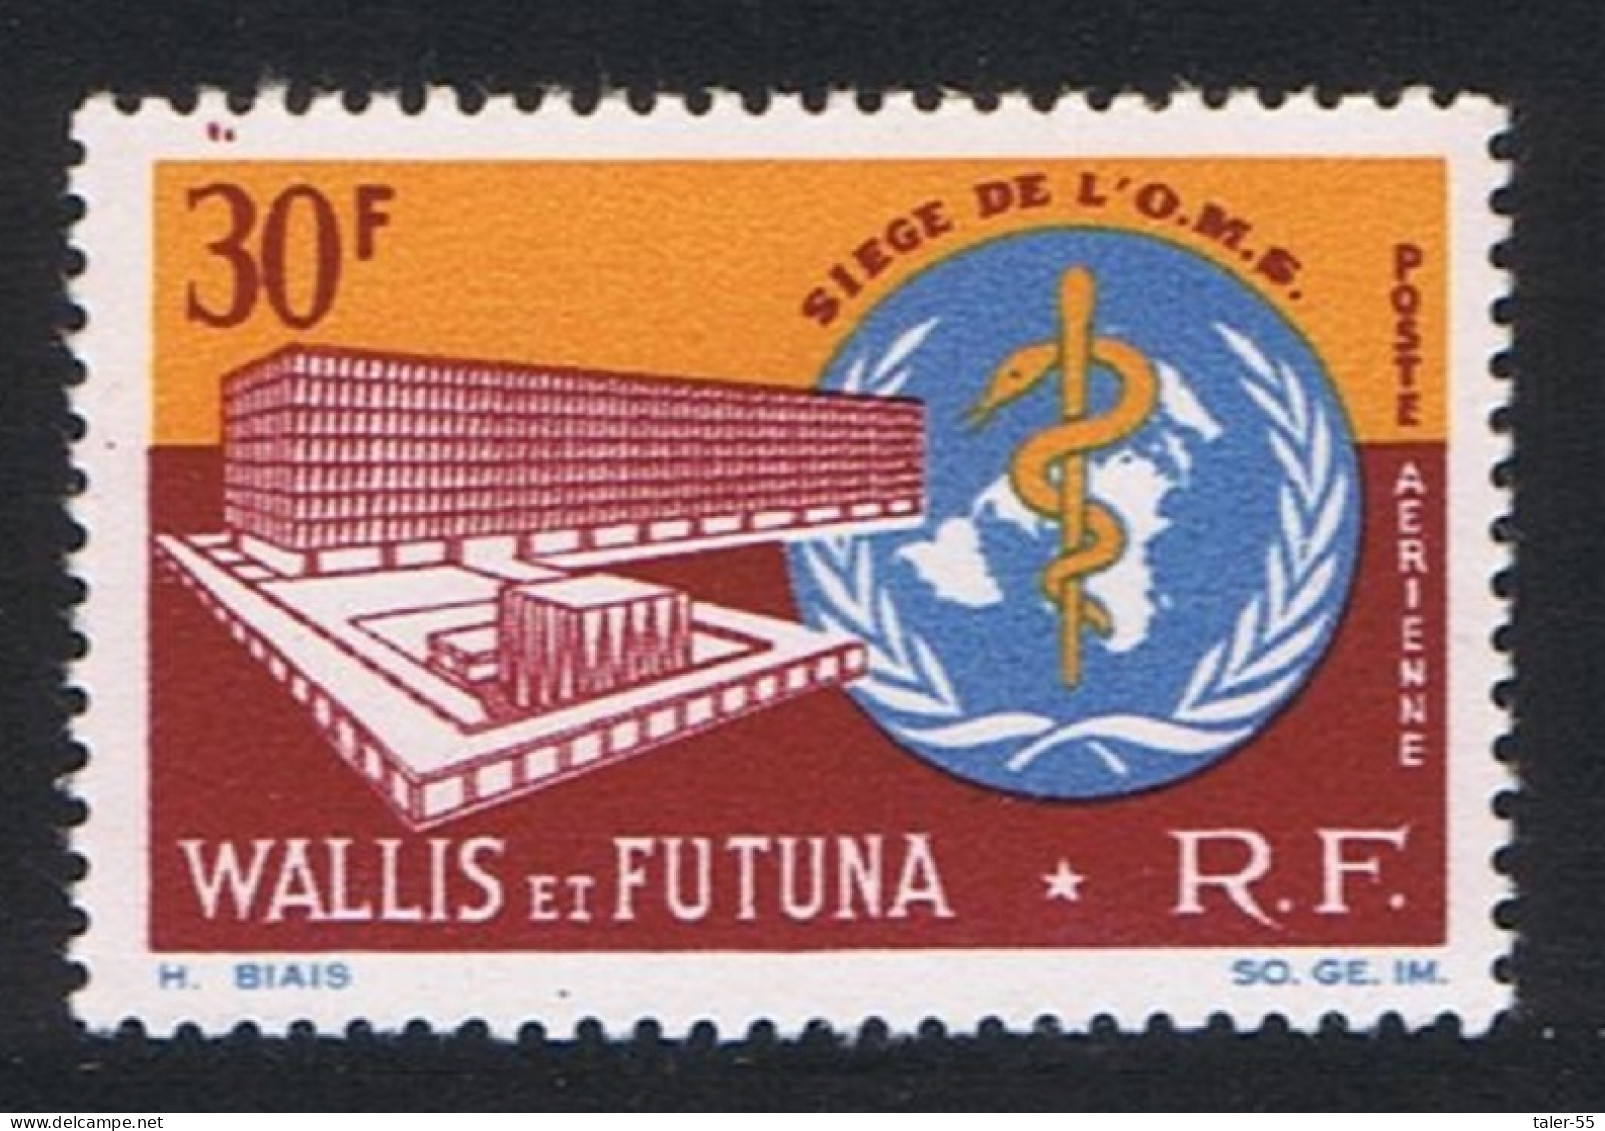 Wallis And Futuna Inauguration Of WHO Headquarters Airmail Def 1966 SG#191 Sc#C25 - Gebraucht